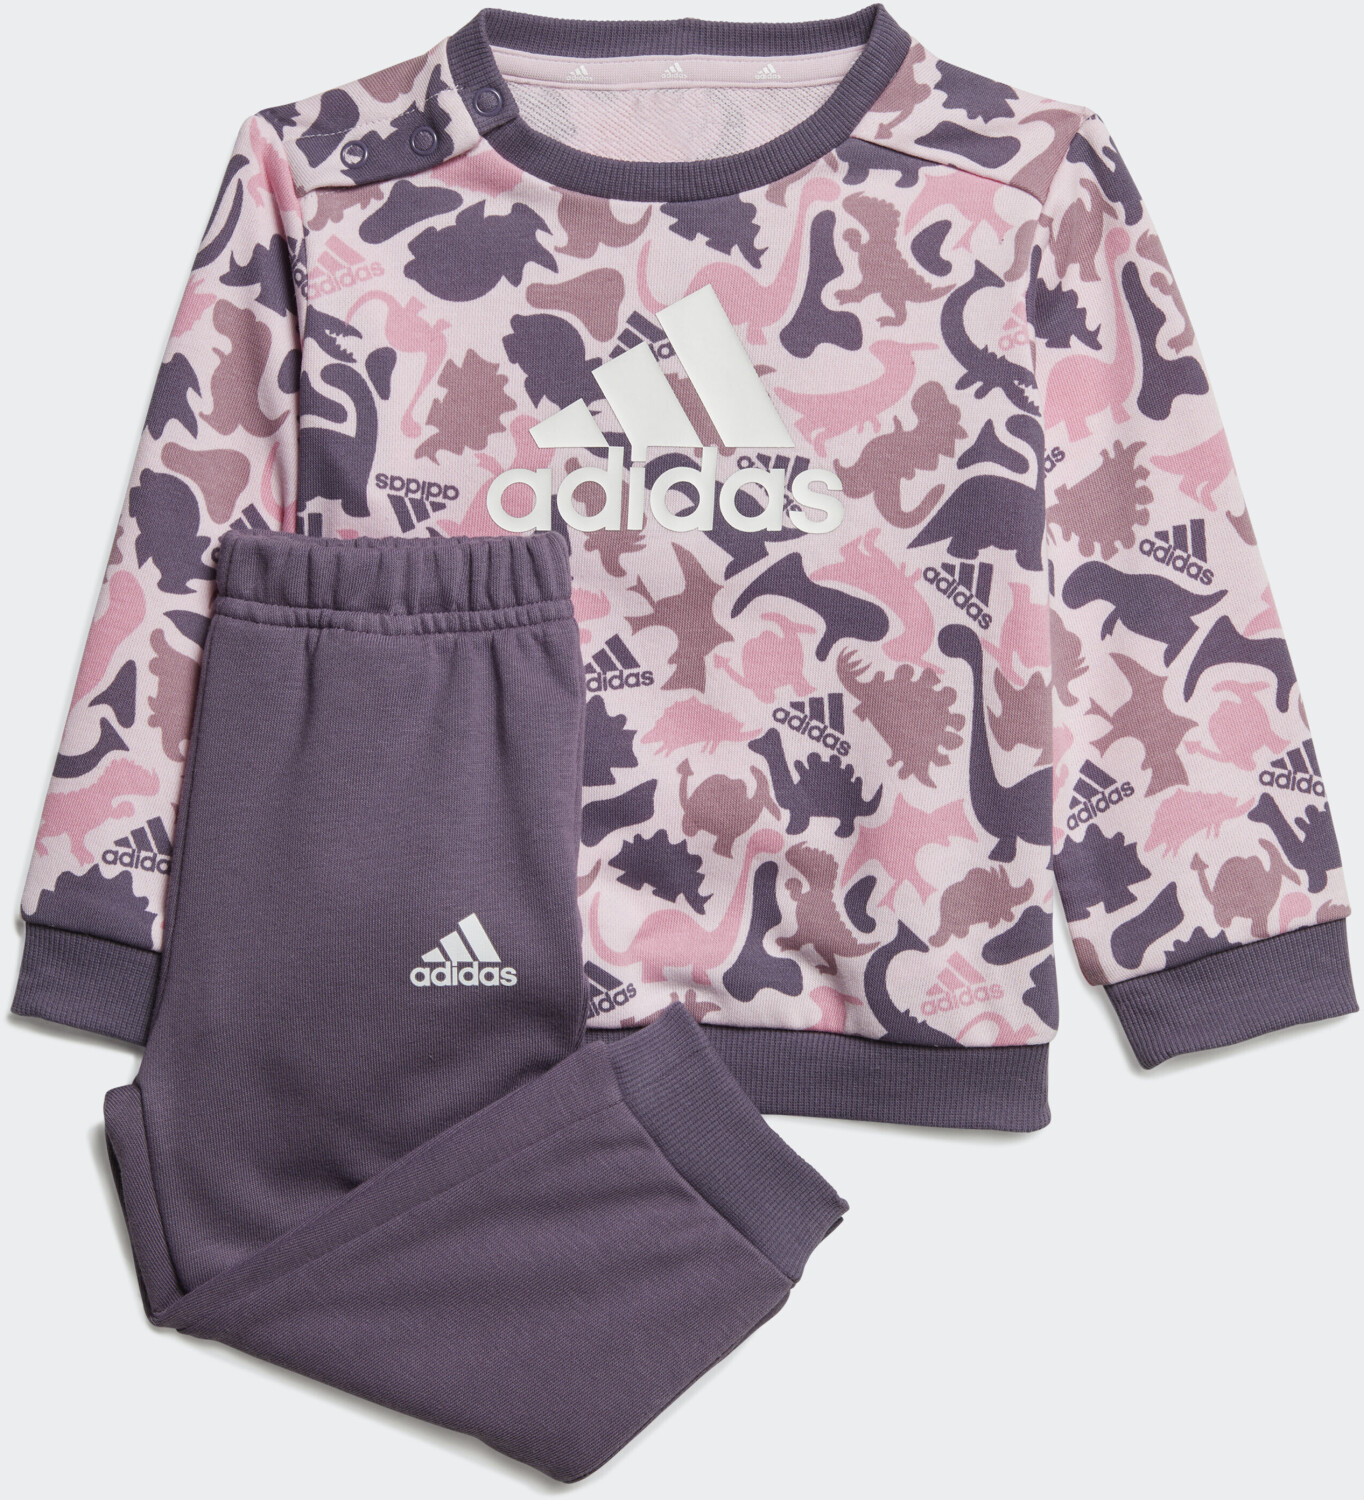 Adidas Kids Essentials Allover Print Kids Jogginganzug ab 33,00 € |  Preisvergleich bei